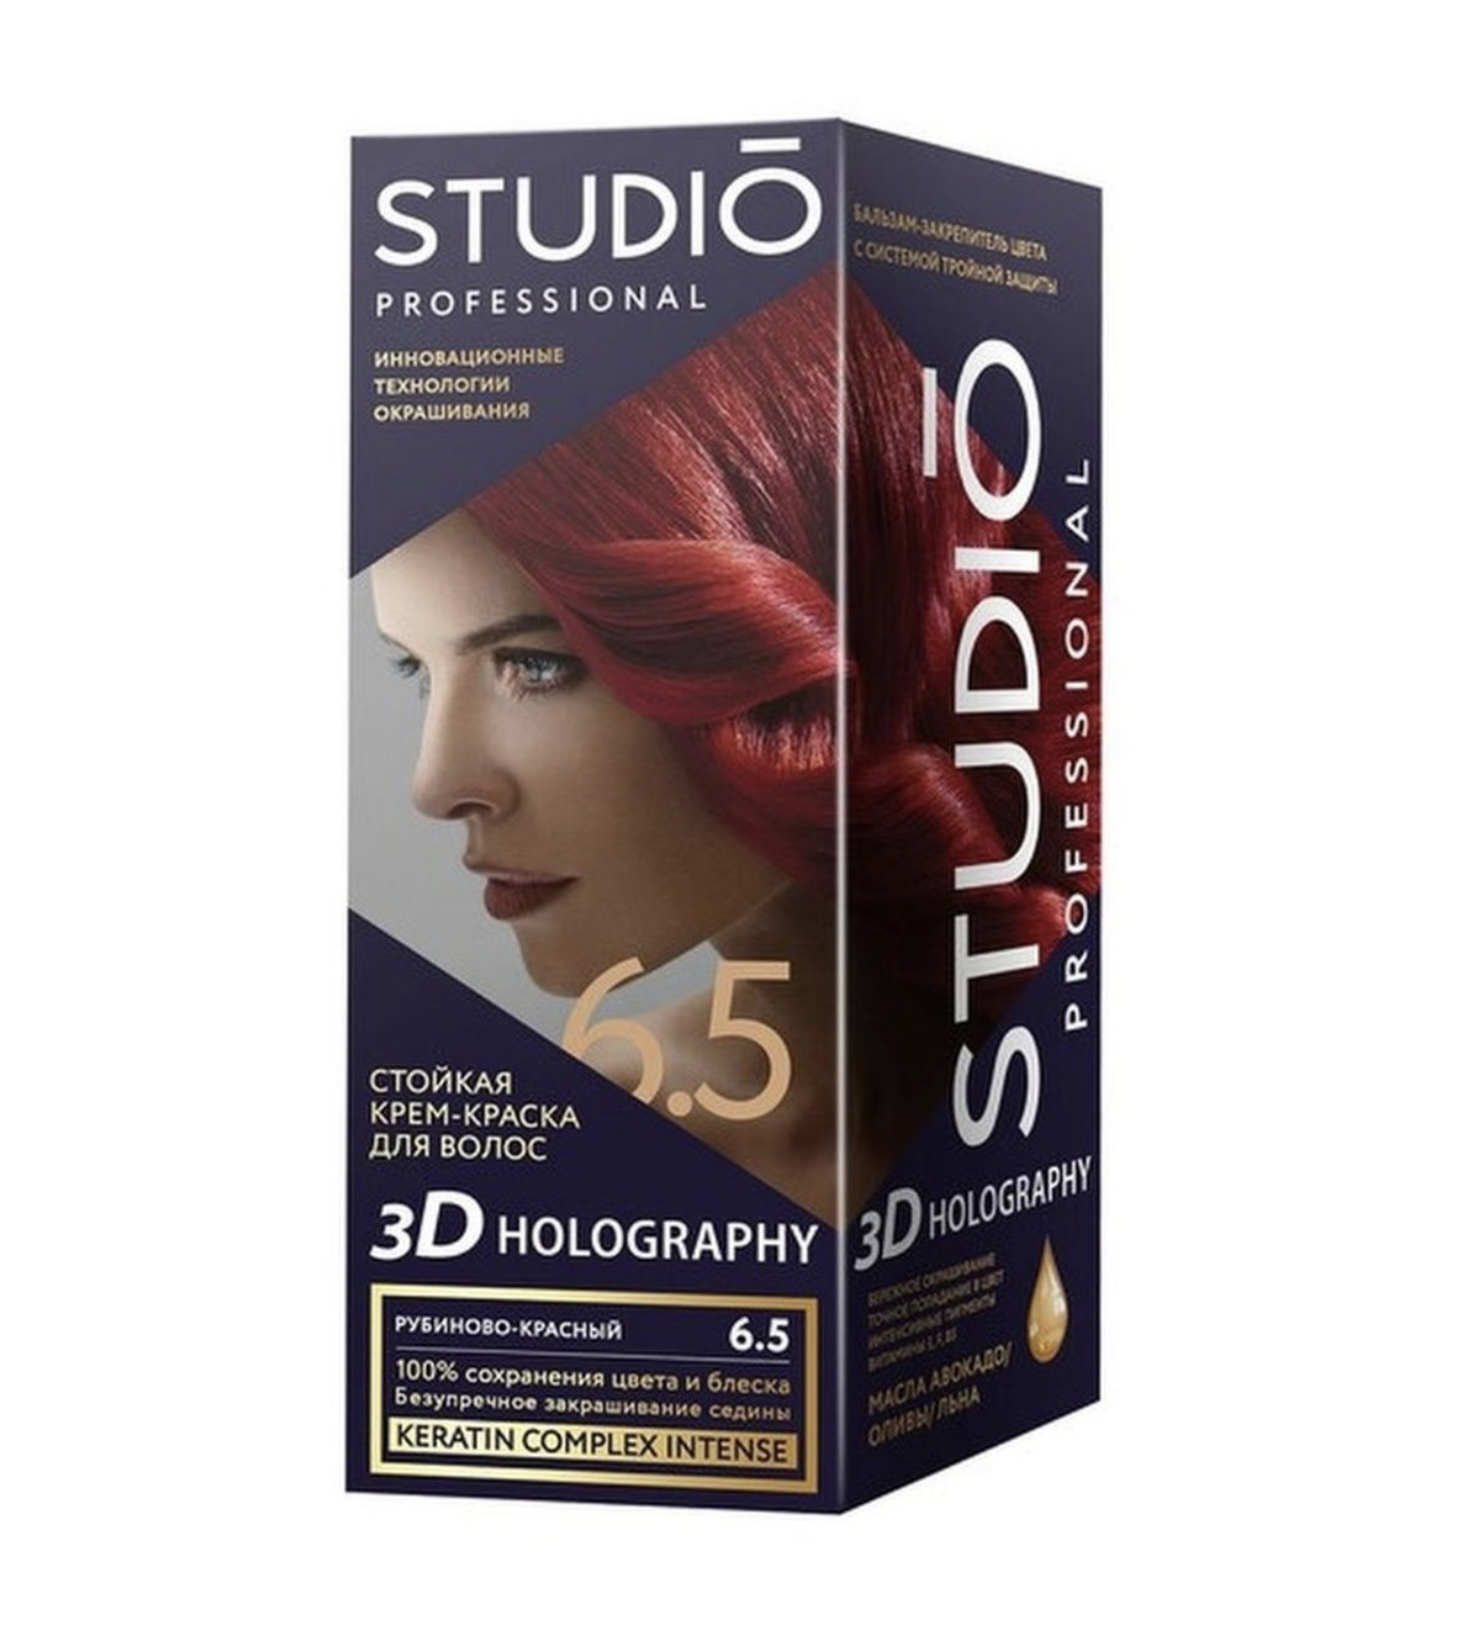   / Studio 3D Holography - -    6.5 - 115 